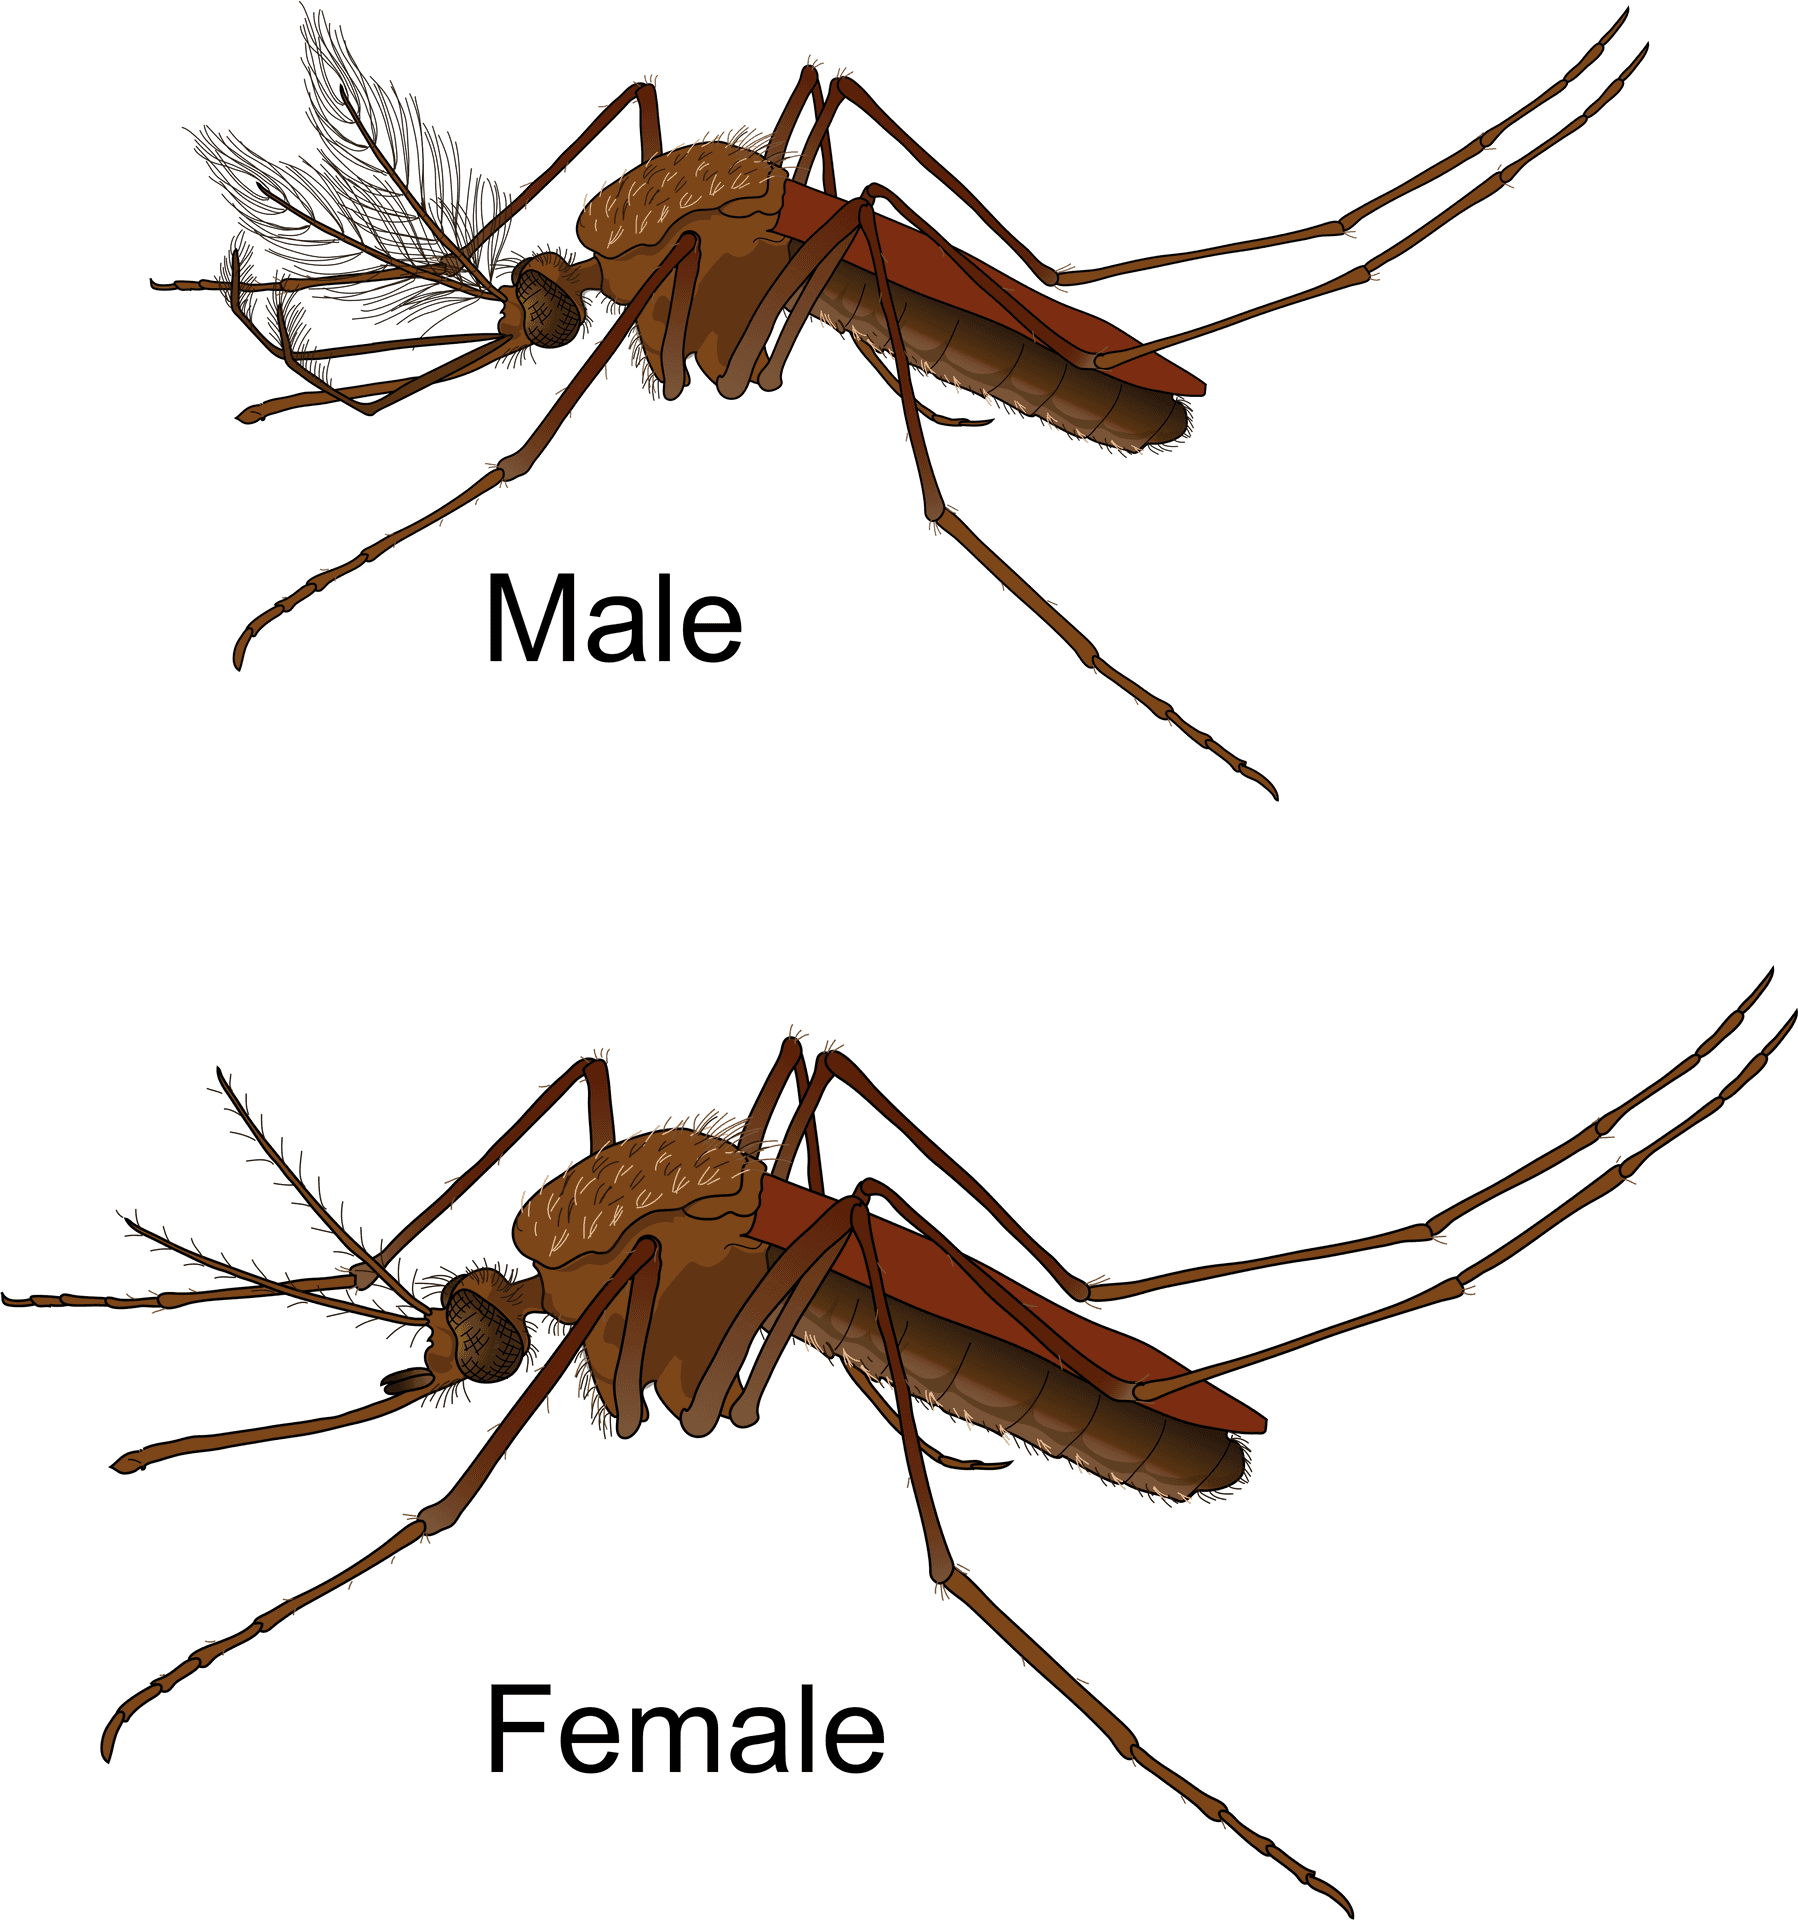 Maleand Female Mosquito Comparison PNG image